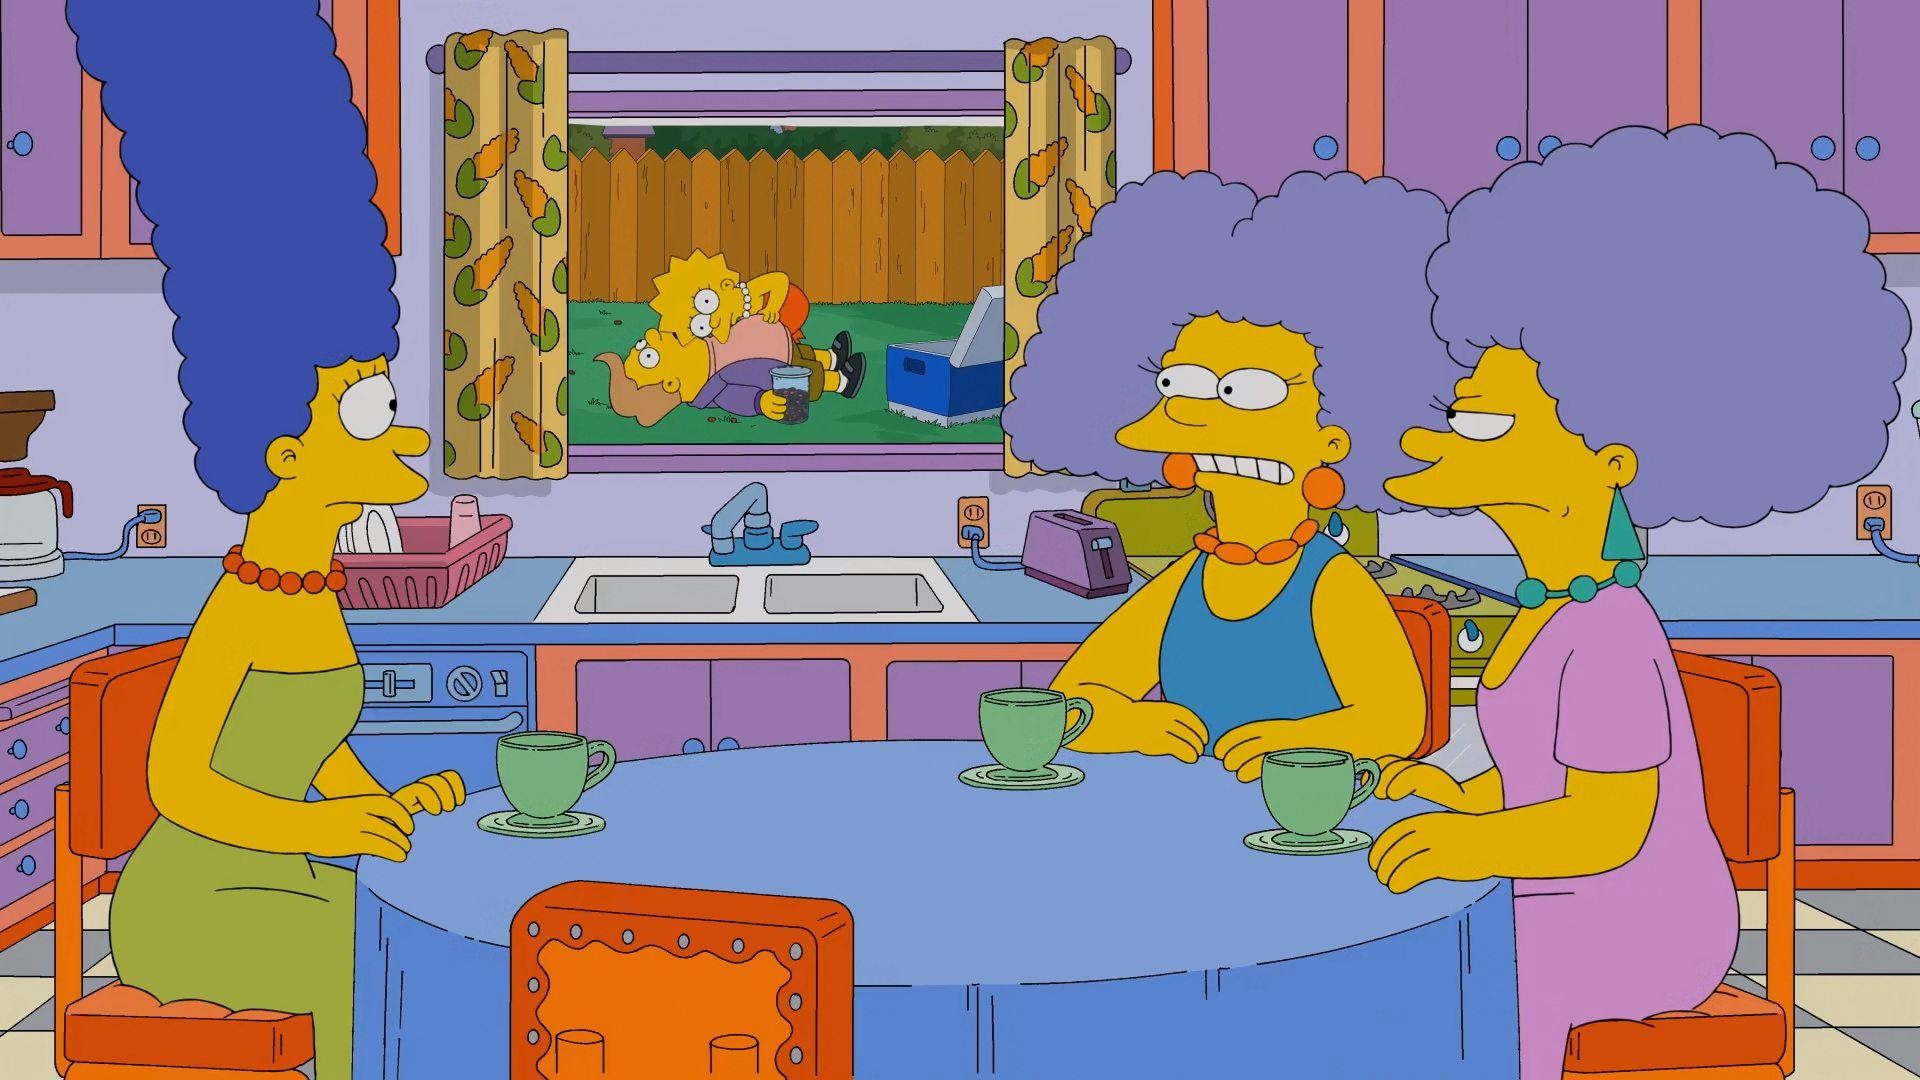 Кадр из фильма Симпсоны / The Simpsons (1989)